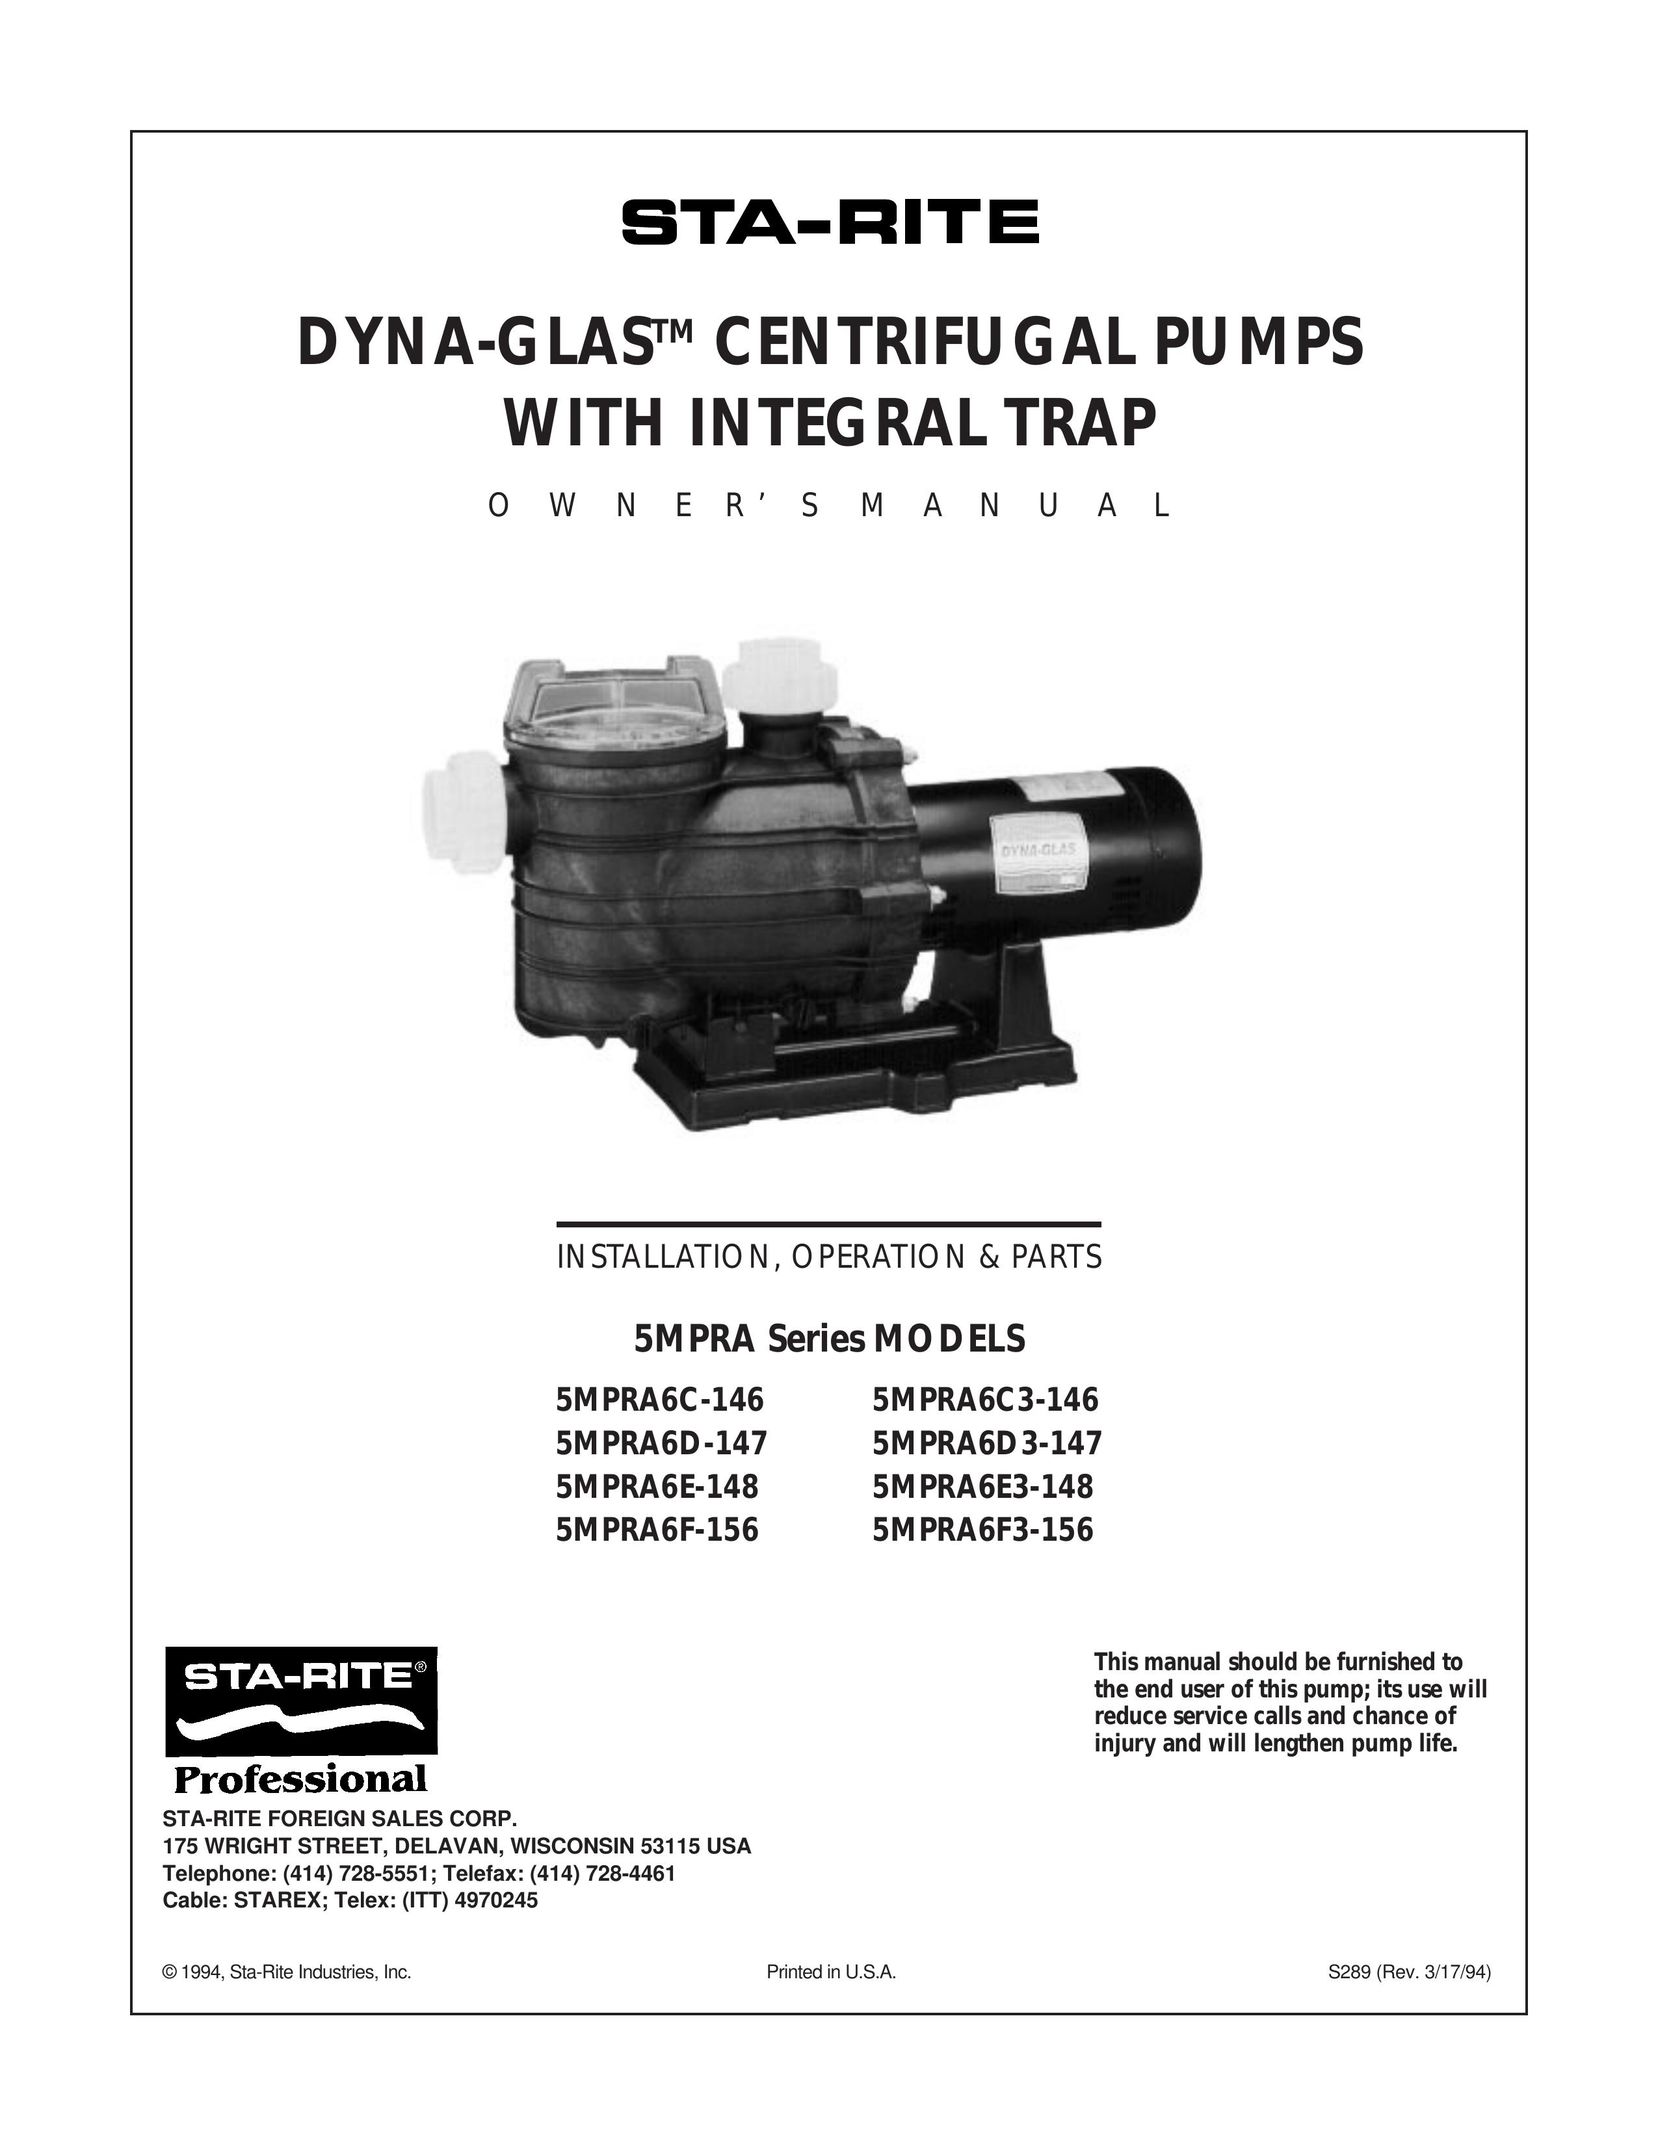 Mad Catz 5MPRA6D3-147 Water Pump User Manual